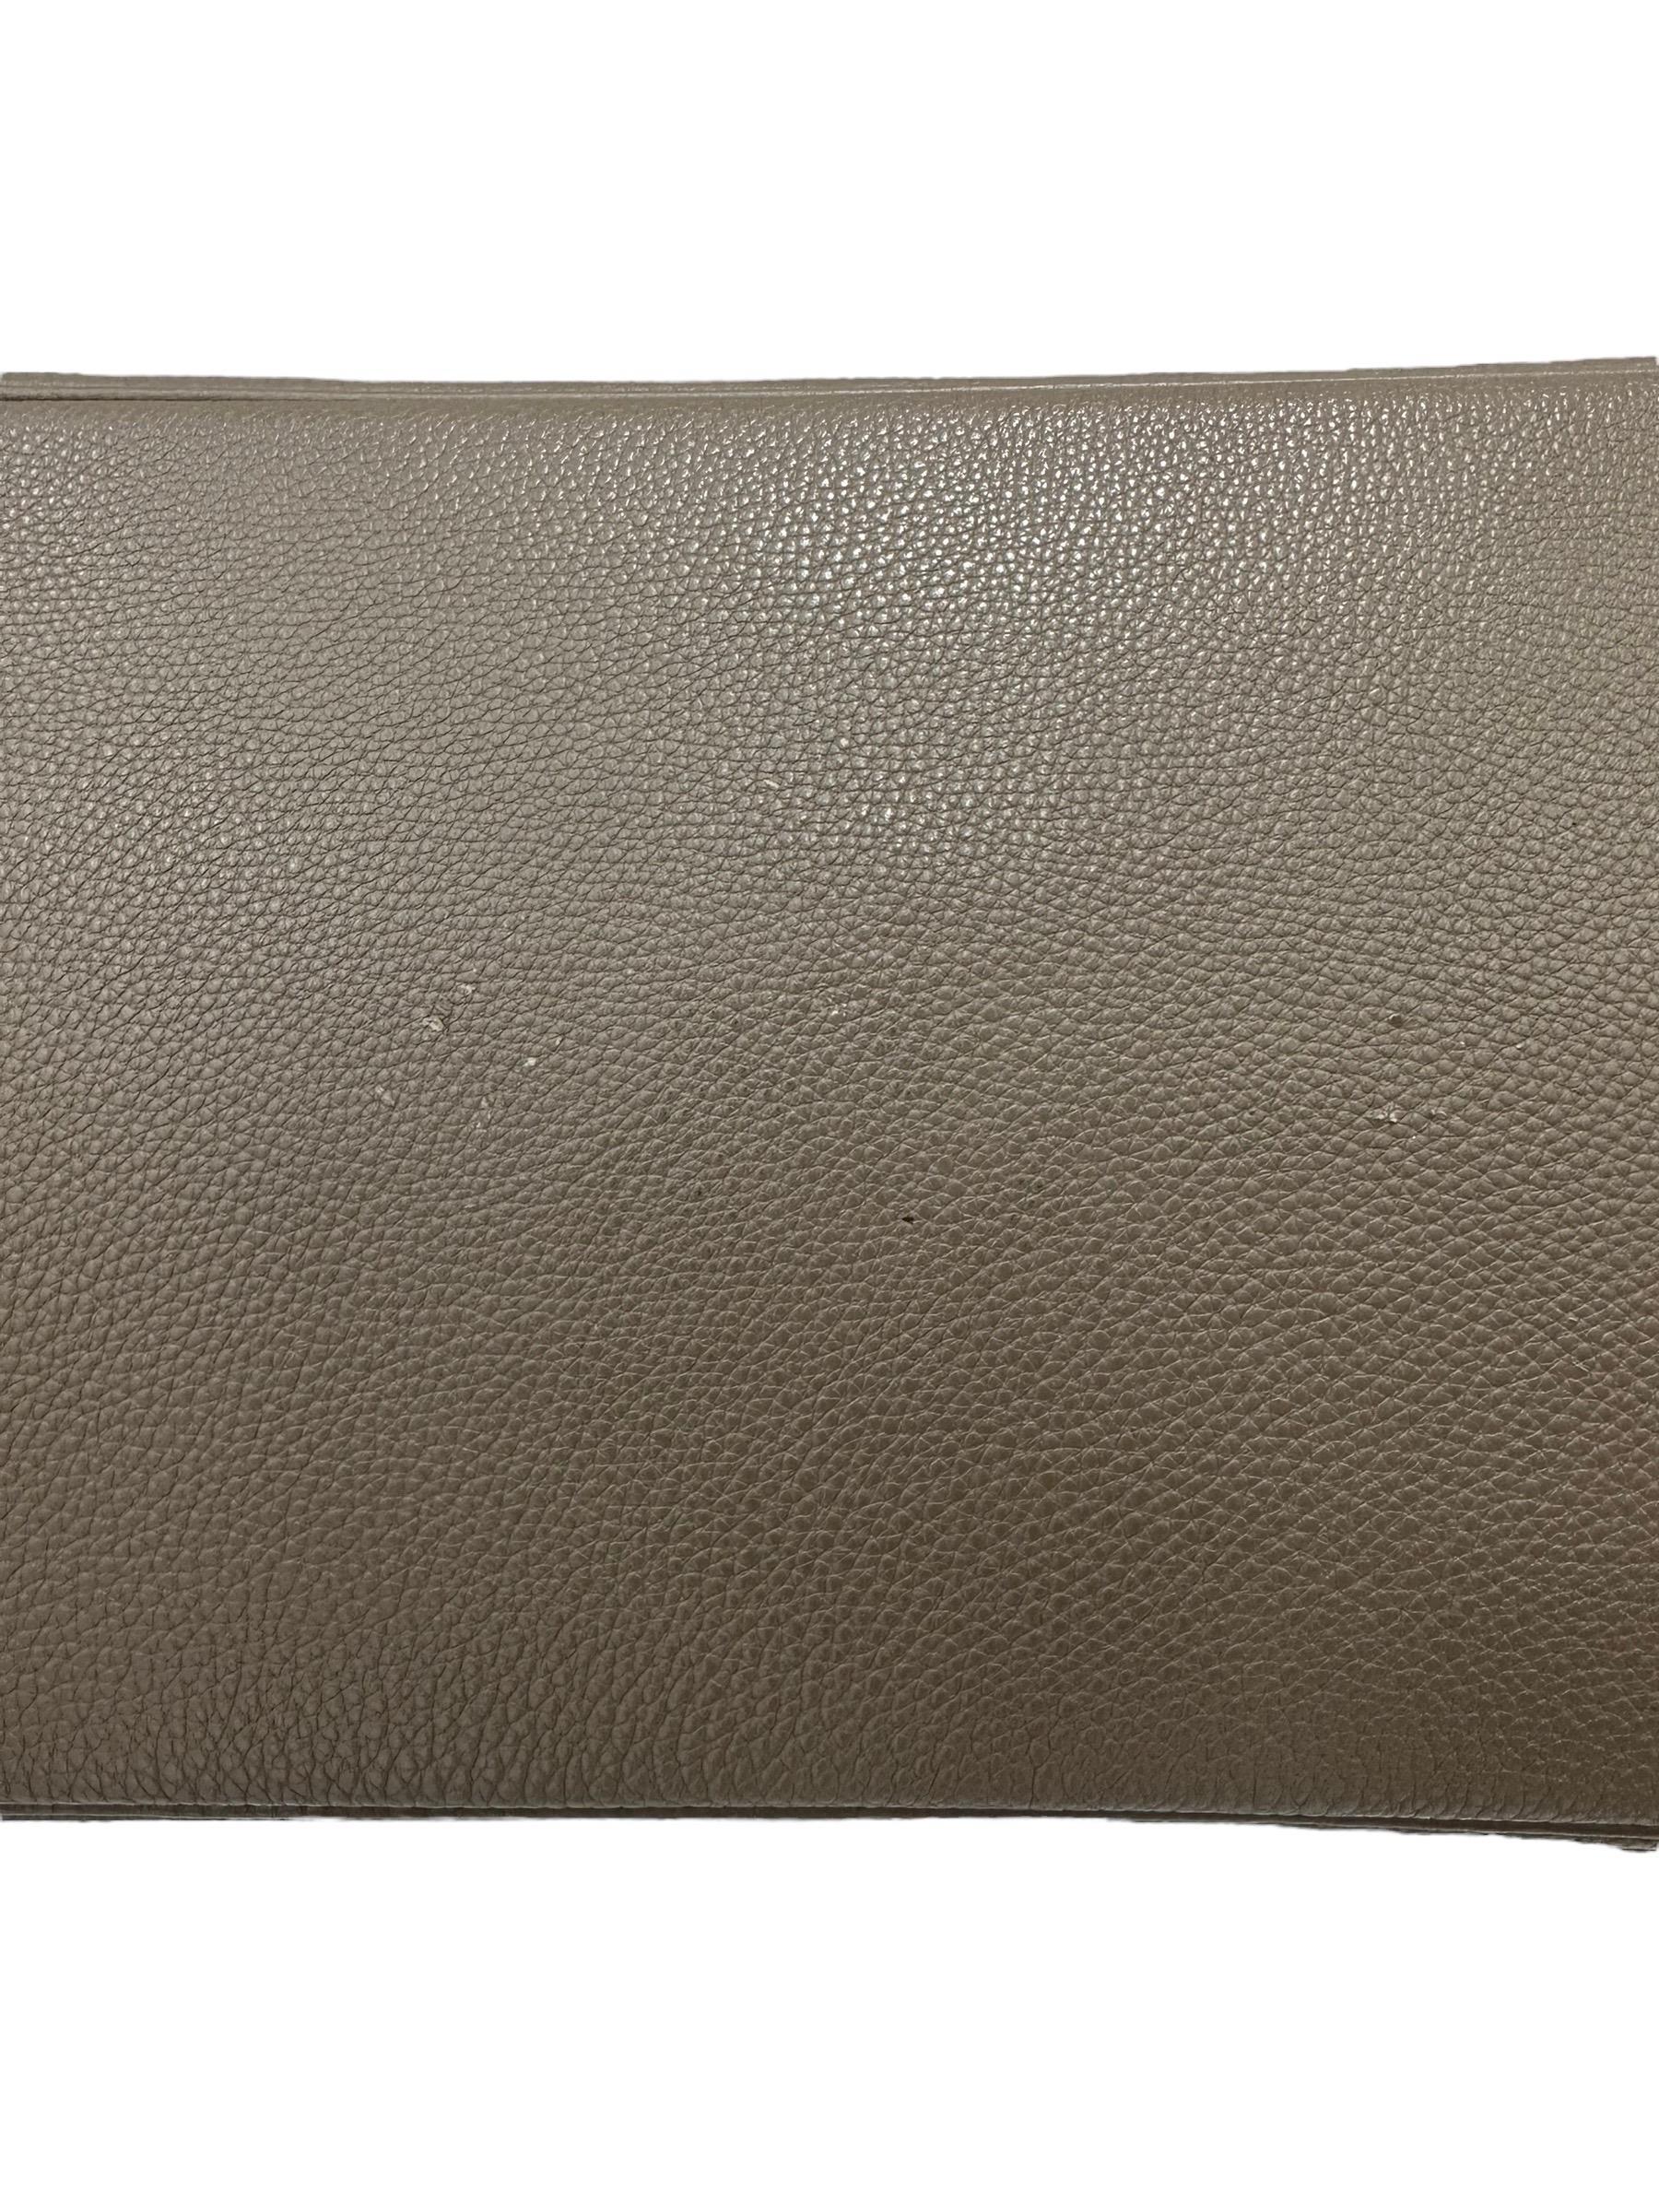 2008 Hermès Birkin 35 Togo Leather Toundra Top Handle Bag For Sale 2